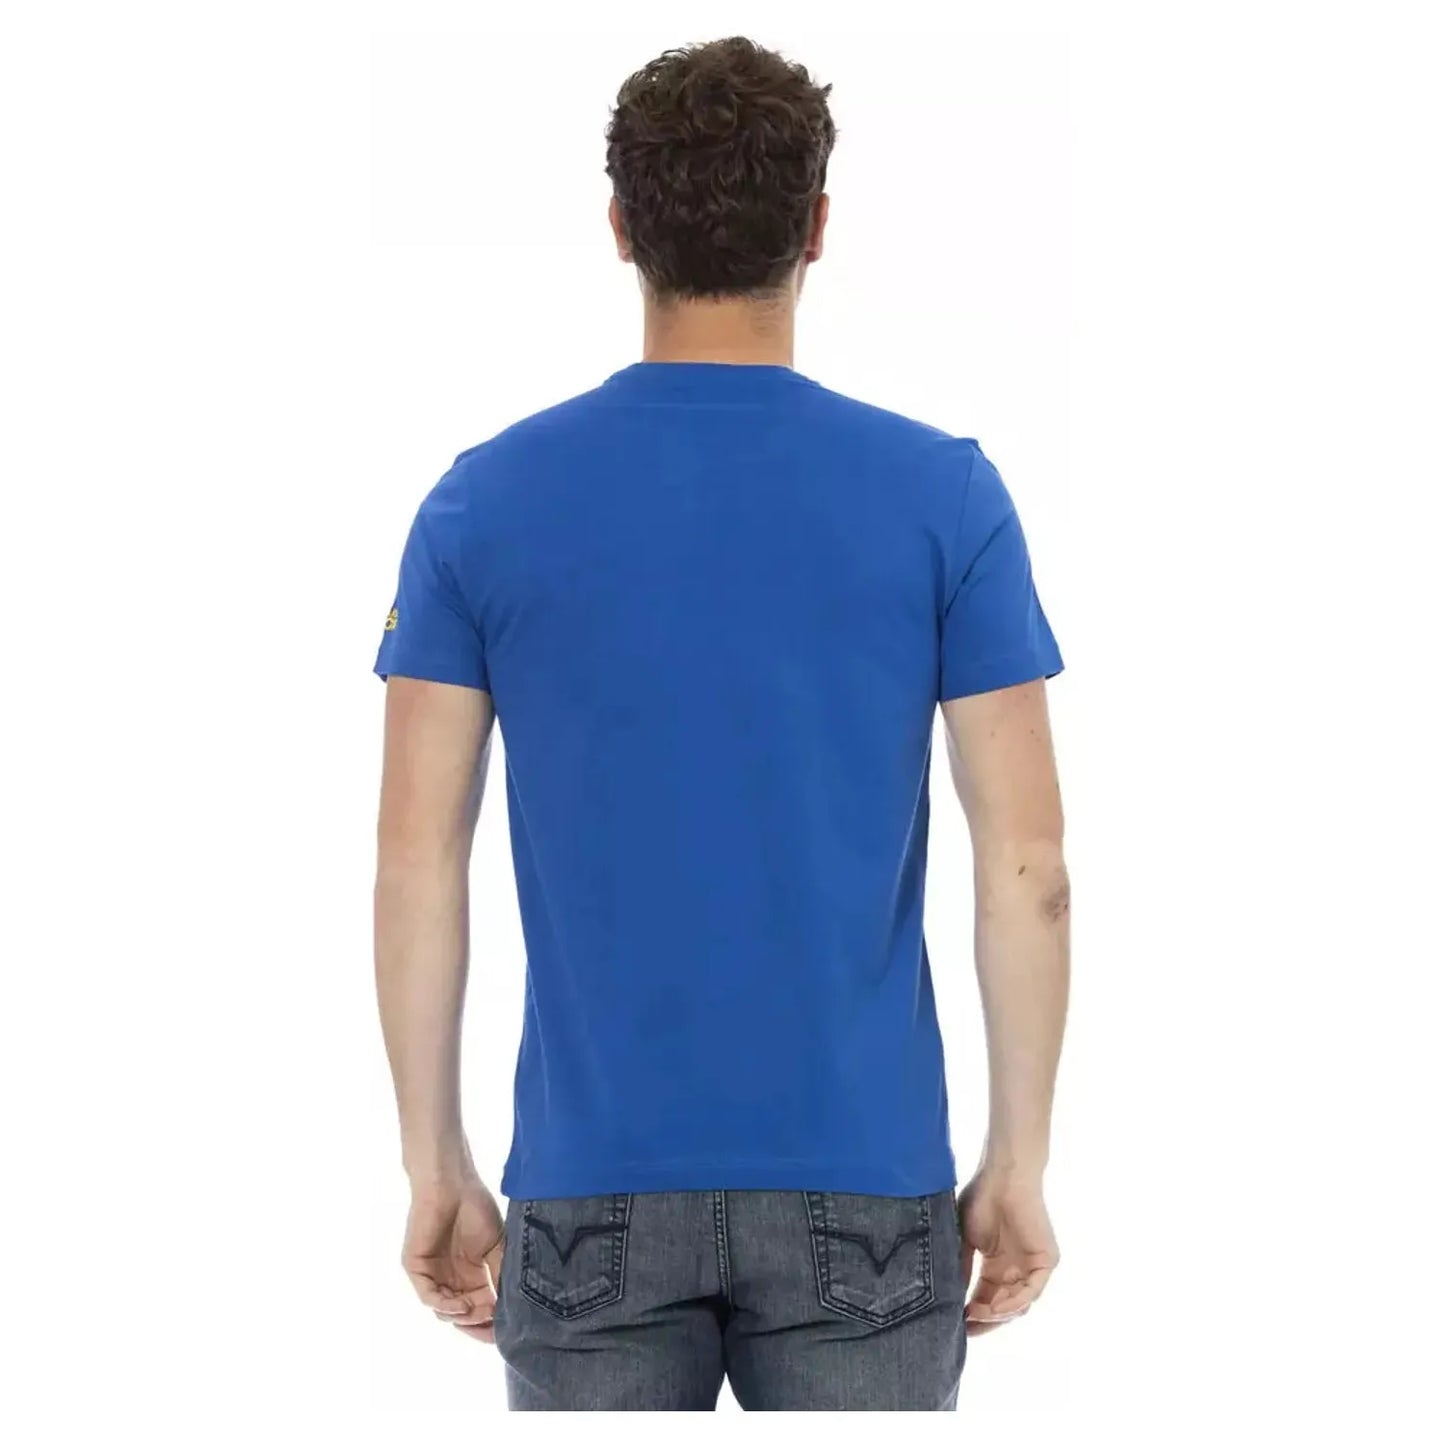 Trussardi Action Elegant Blue Tee with Front Print blue-cotton-t-shirt-90